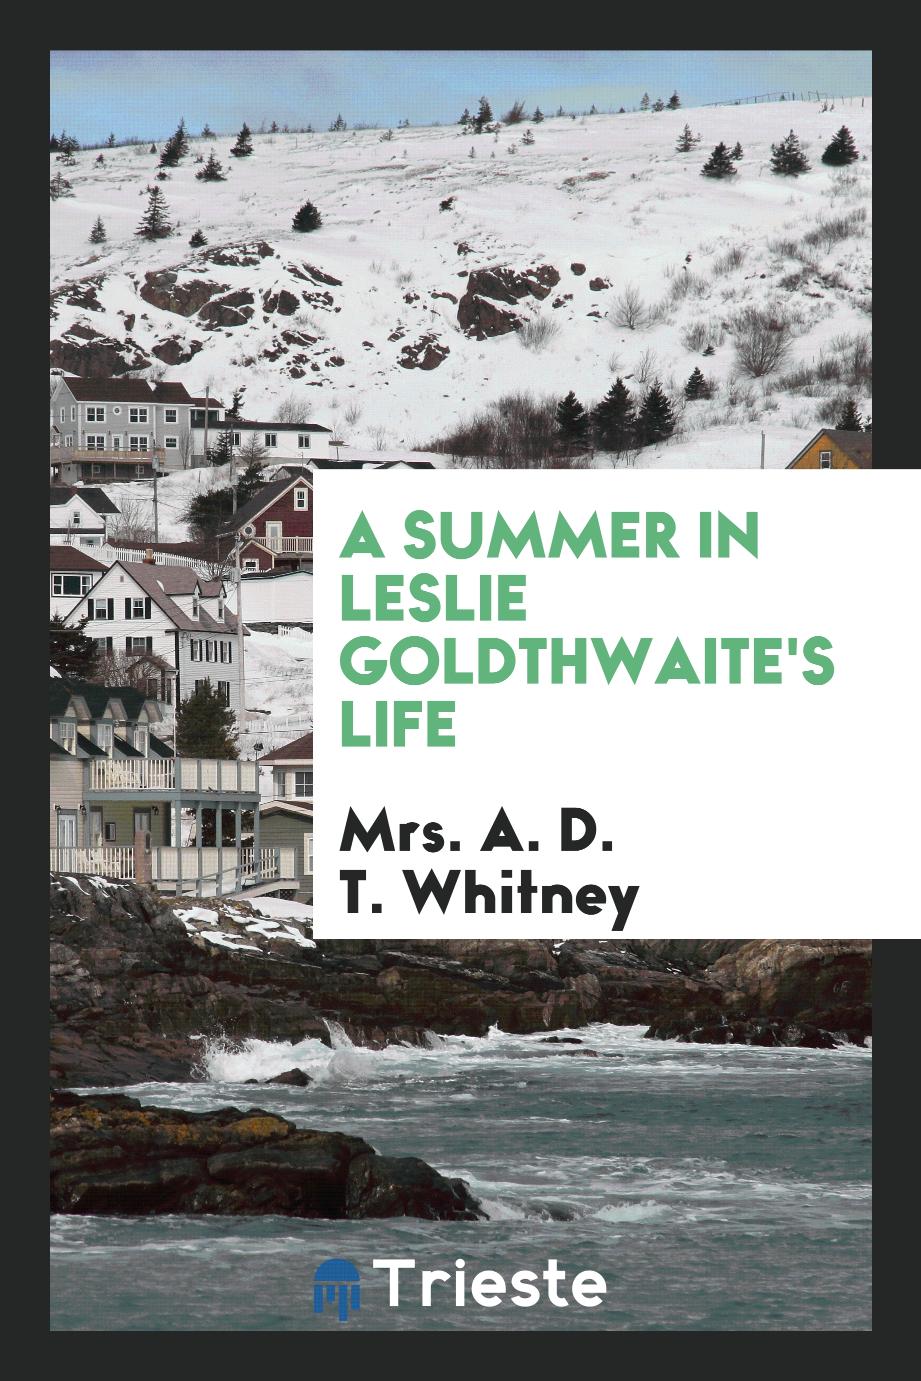 A summer in Leslie Goldthwaite's life